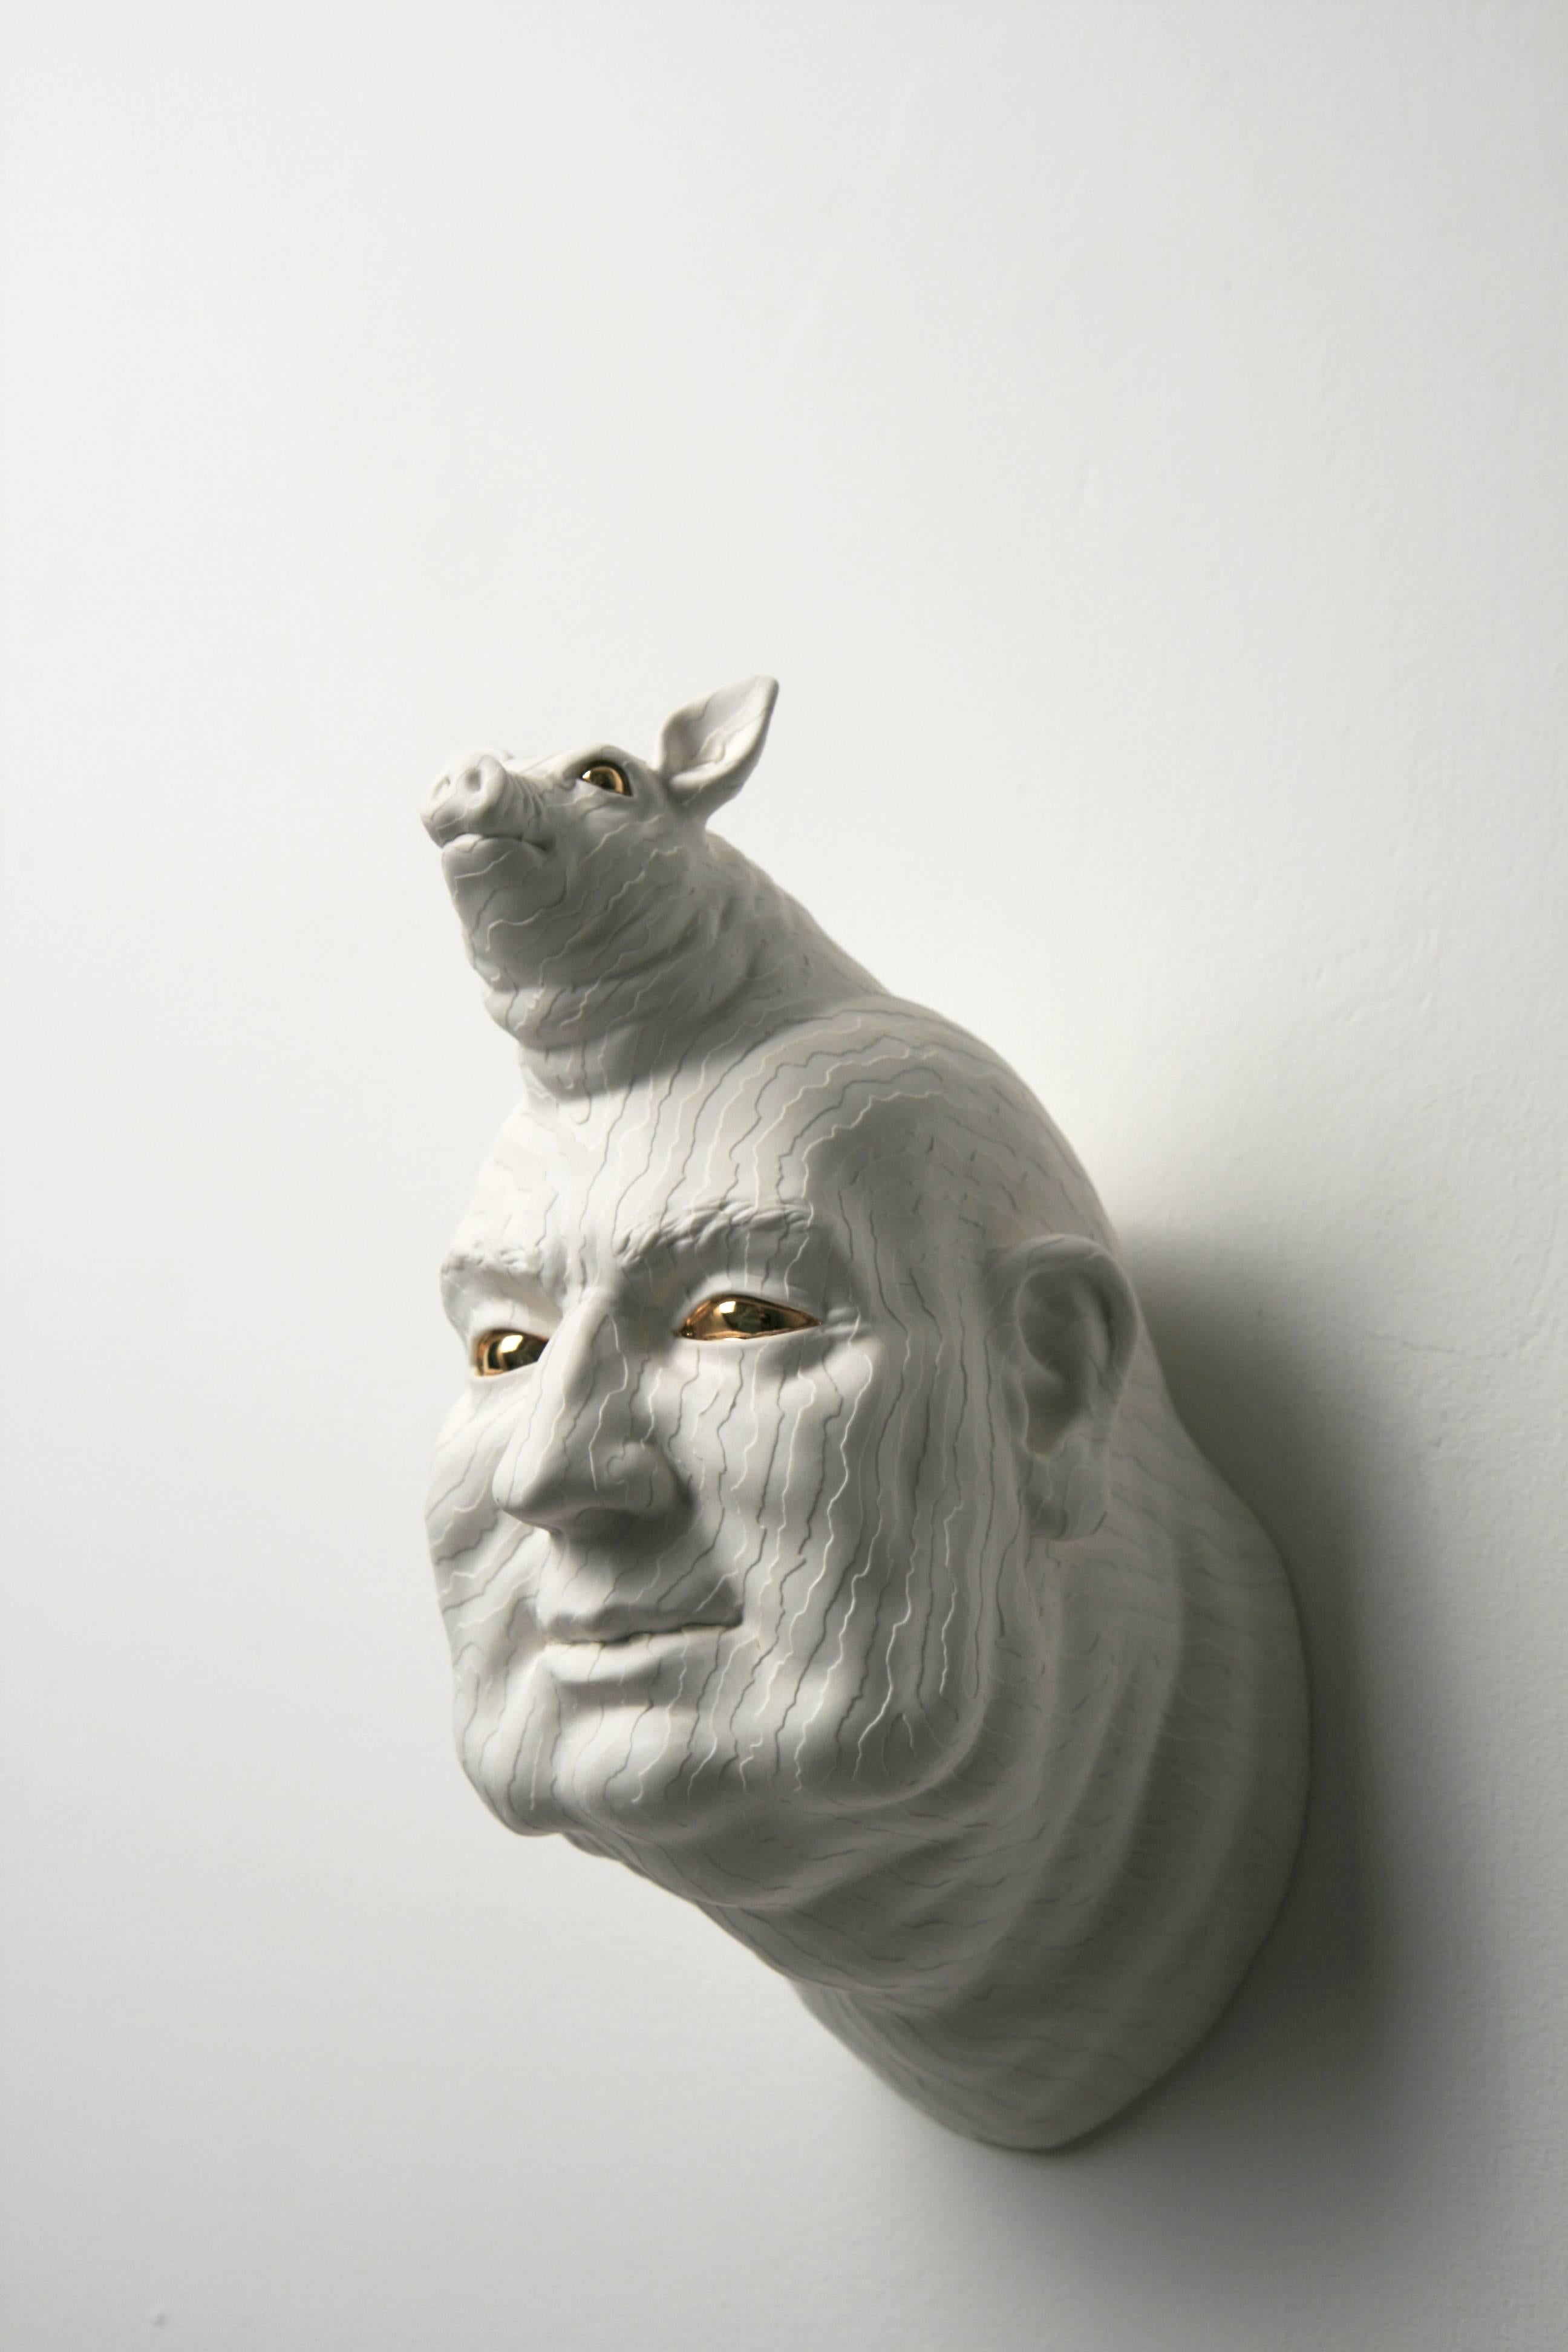 Between - Pig - Sculpture by Wookjae Maeng